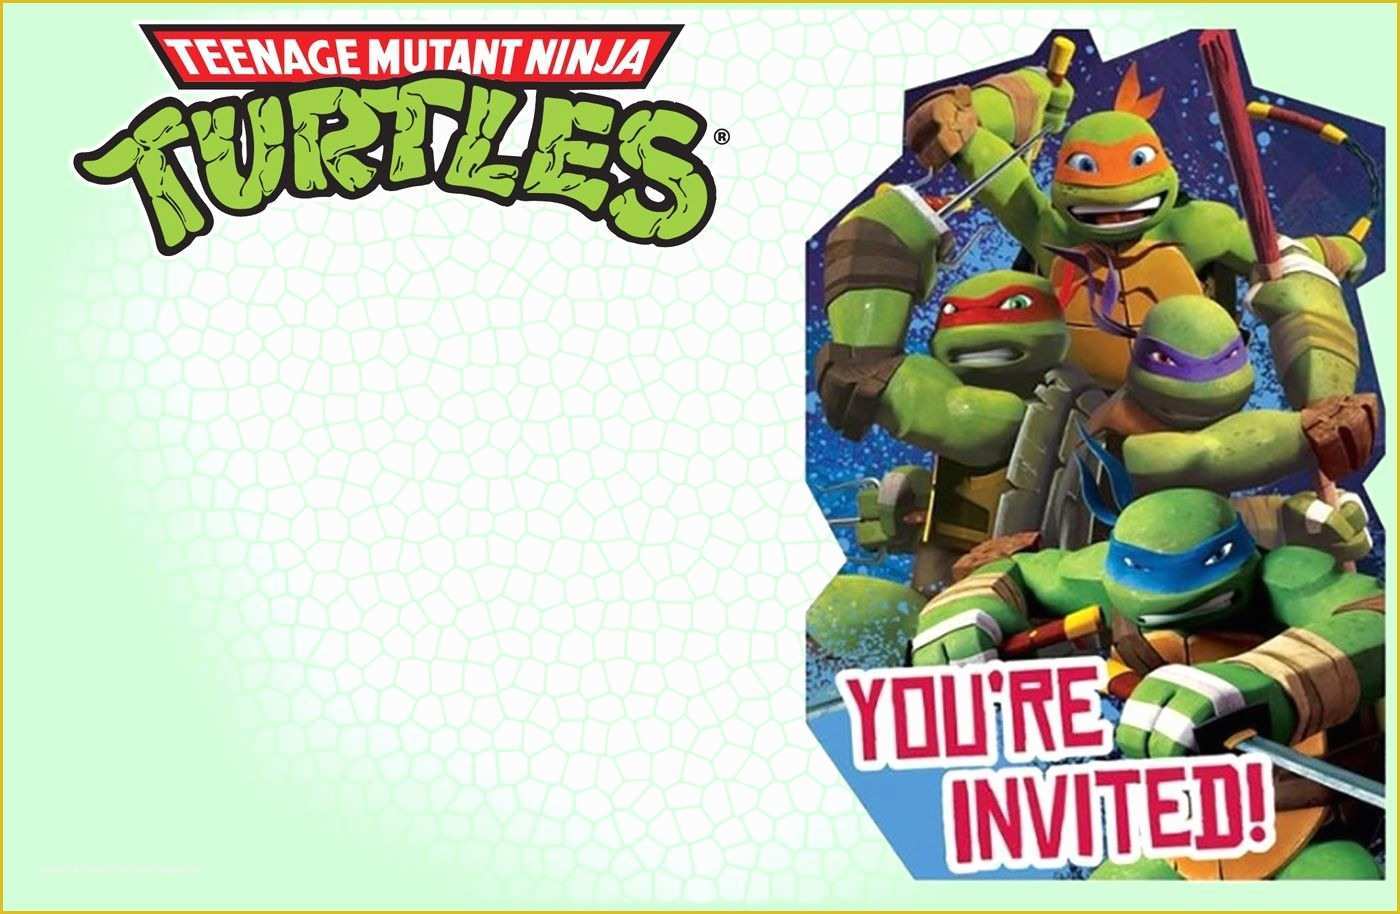 Ninja Birthday Party Invitation Template Free Of Editable Ninja Turtle Invitation Template